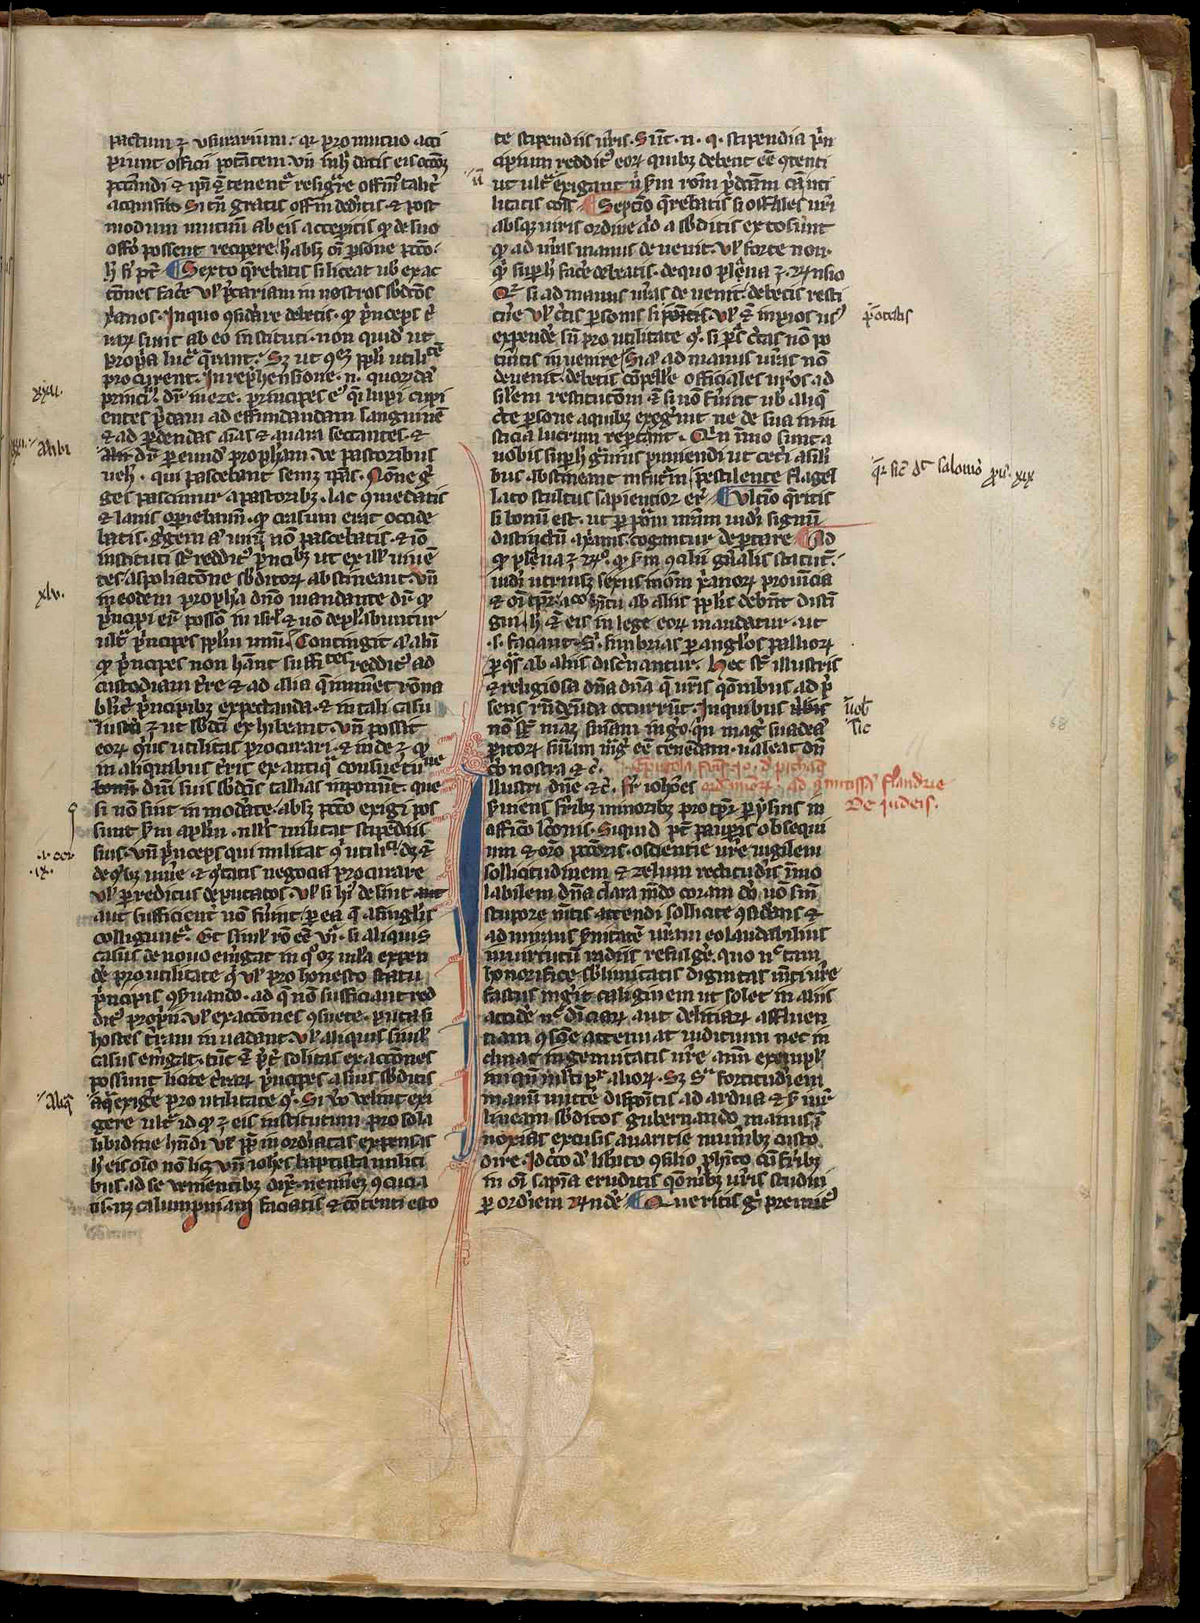 Folio 68, recto with marginalia and ornate initial